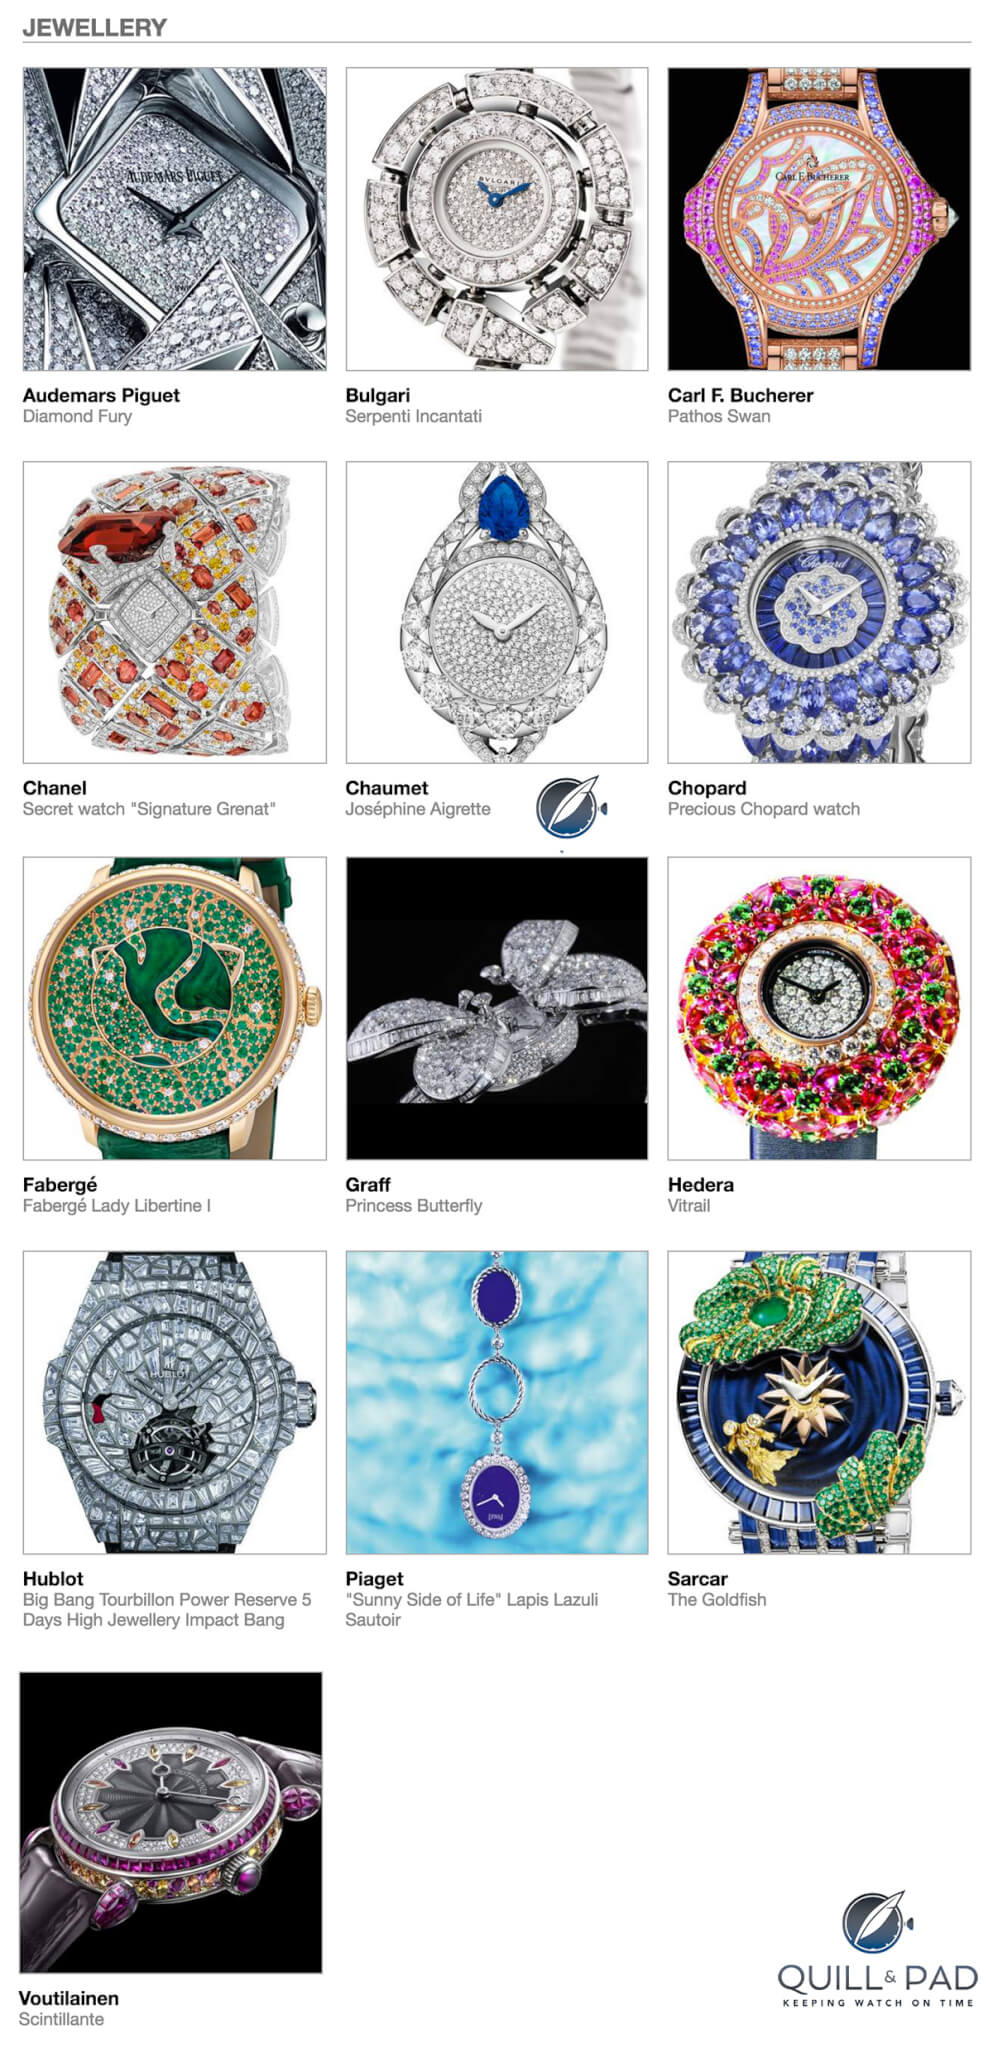 The Jewellery category entries in the 2016 Grand Prix d’Horlogerie de Genève (GPHG)